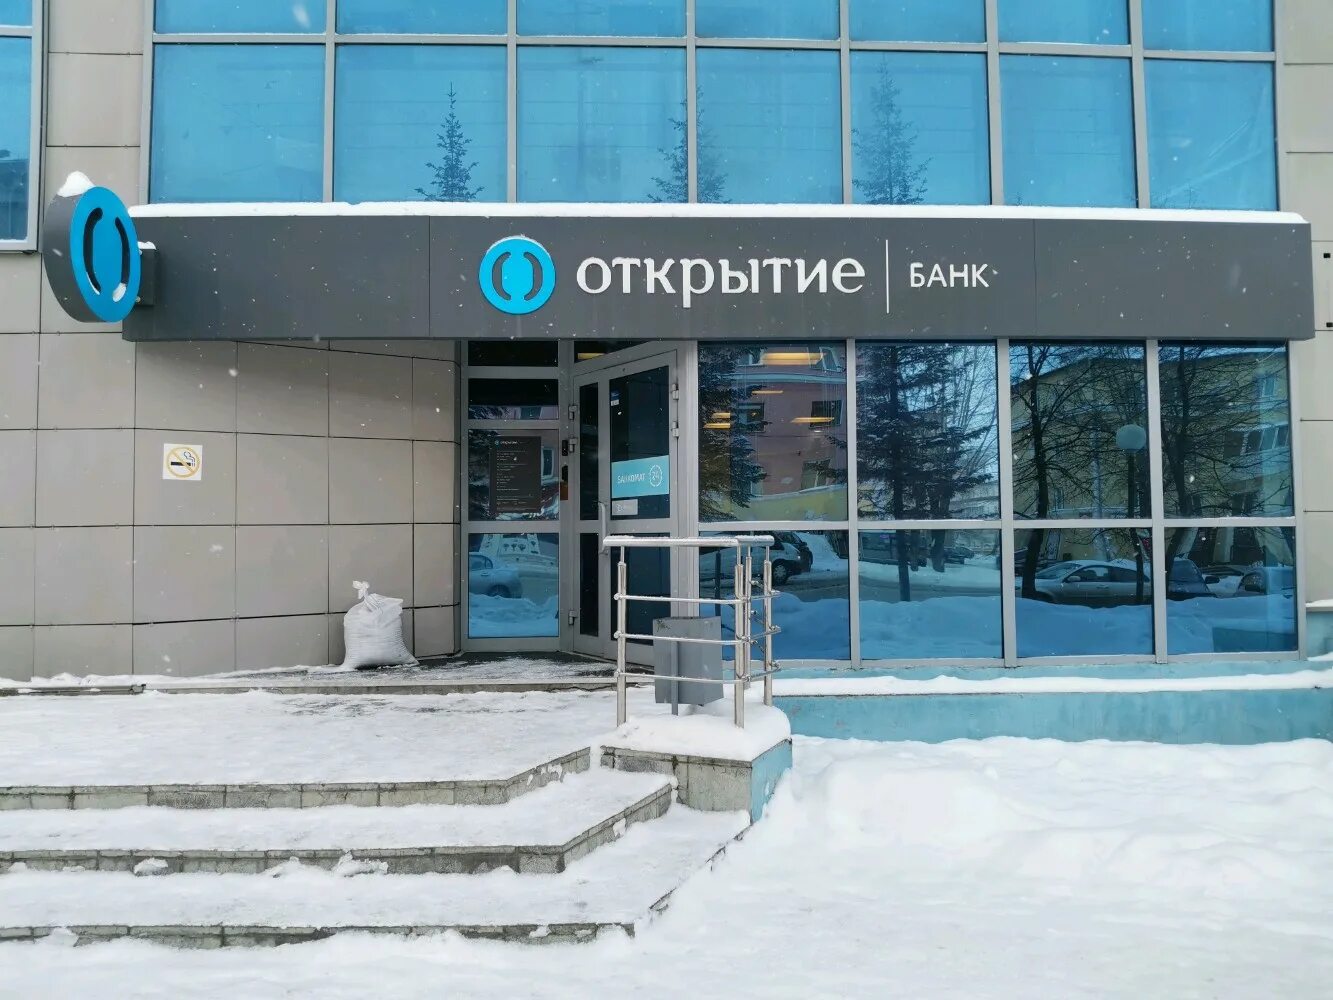 Банк испол. Банк открытие на улице Титова Новосибирск. Титова 29 Новосибирск банк открытие. Банк открытие на Титова 1 Новосибирск. Титова 1 открытие банк.